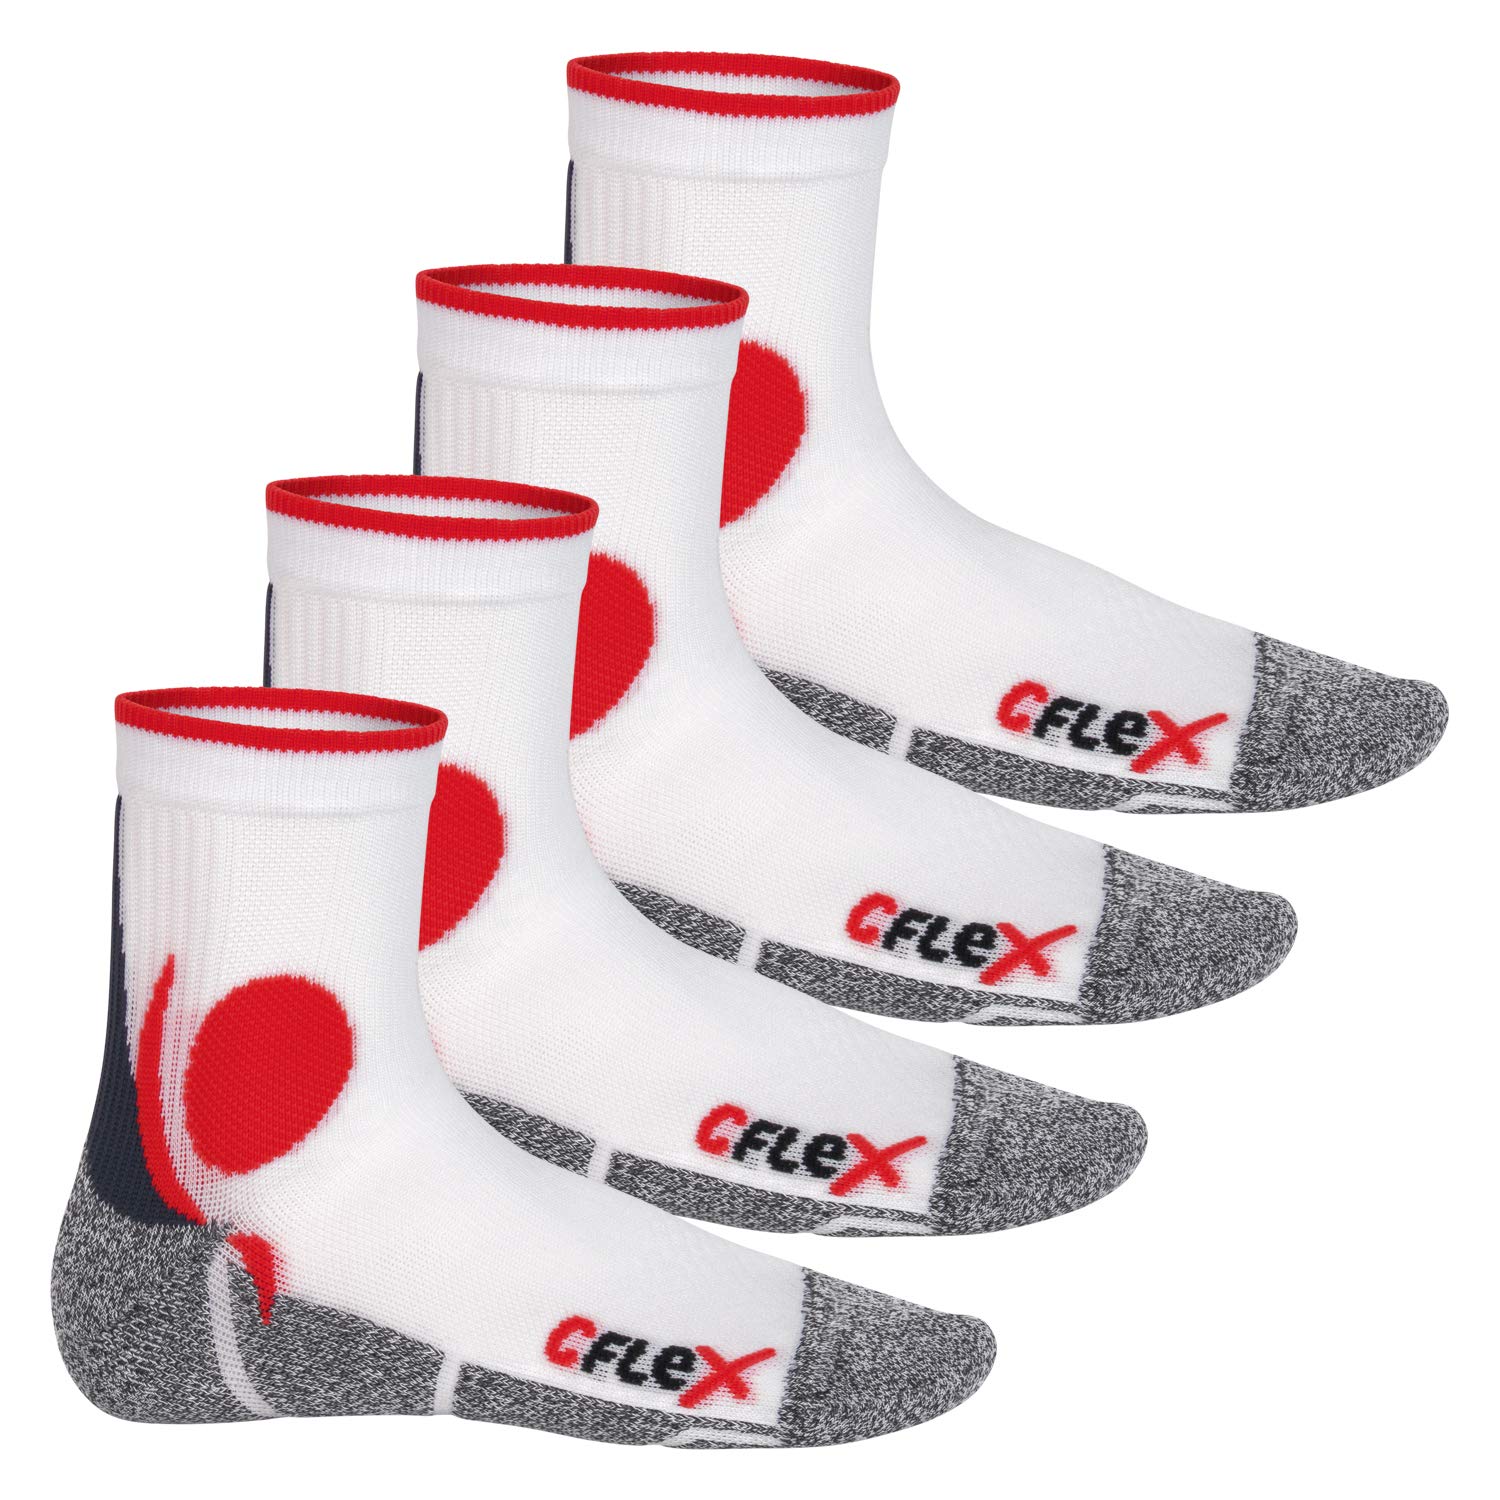 CFLEX Damen und Herren Running Funktions-Socken (4 Paar) Laufsocken - Weiss-Rot 43-46